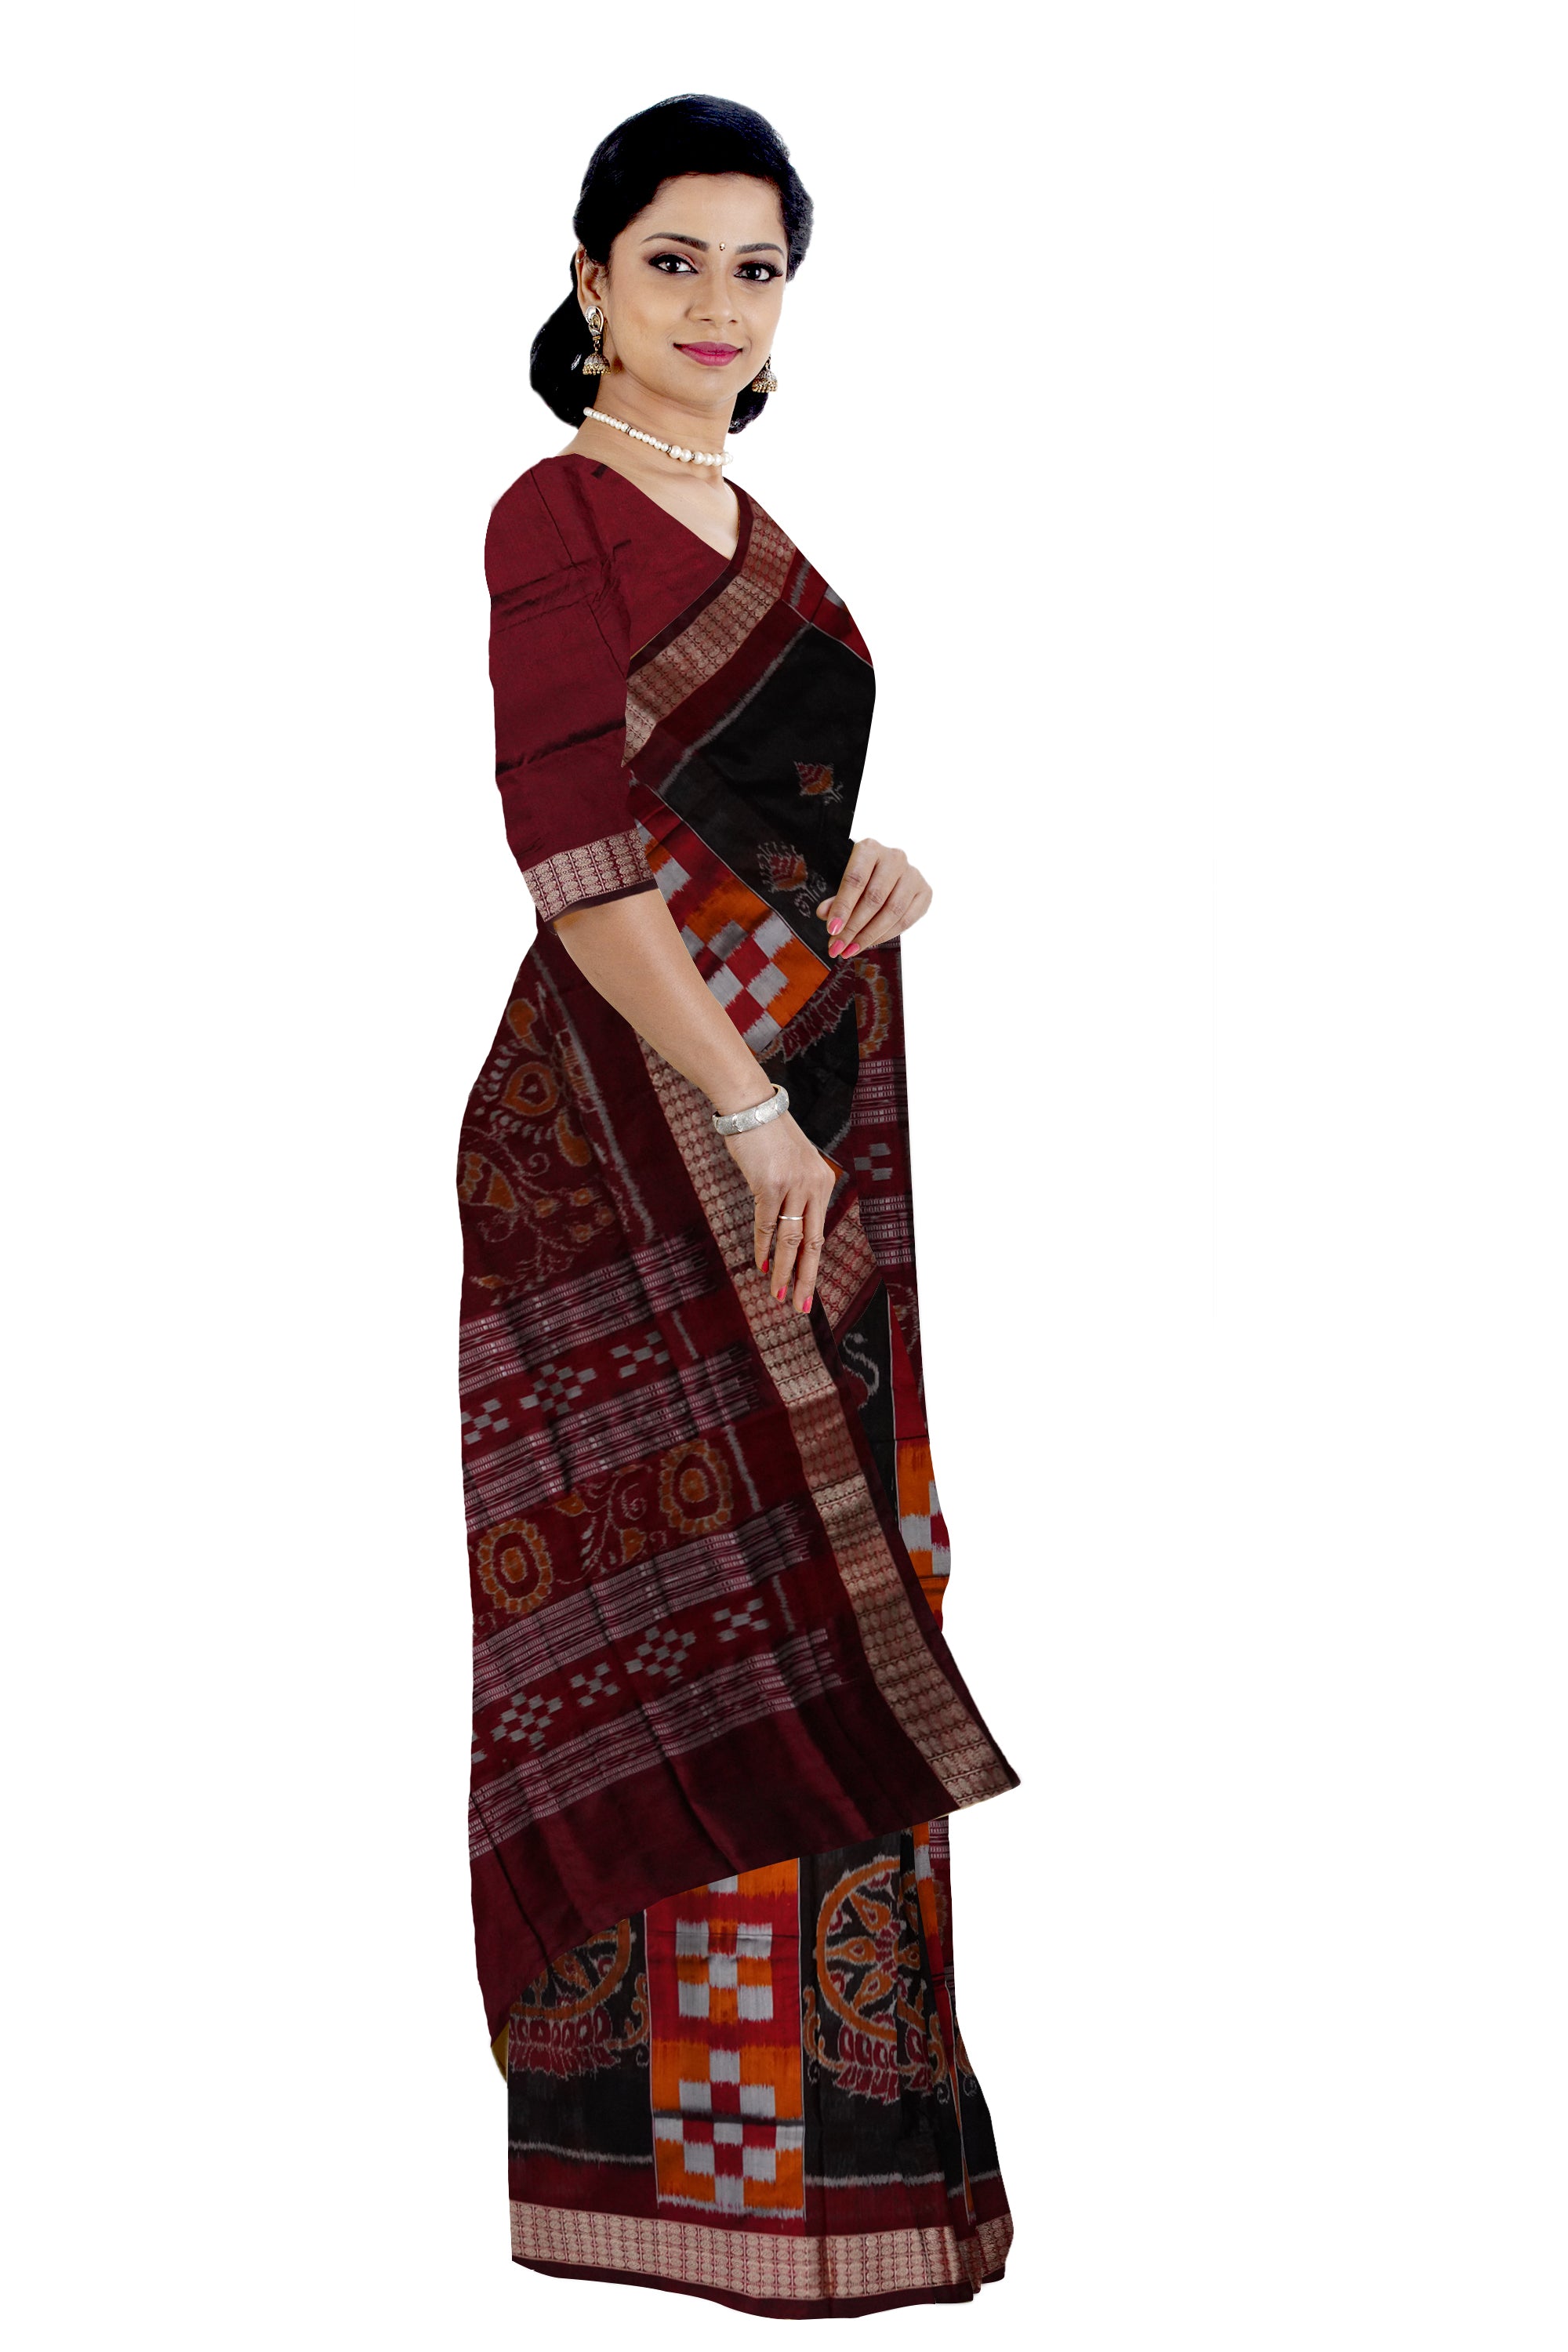 Konarka with Pasapali design Sambalpuri pata saree in Black,Orange and Coffee color. - Koshali Arts & Crafts Enterprise